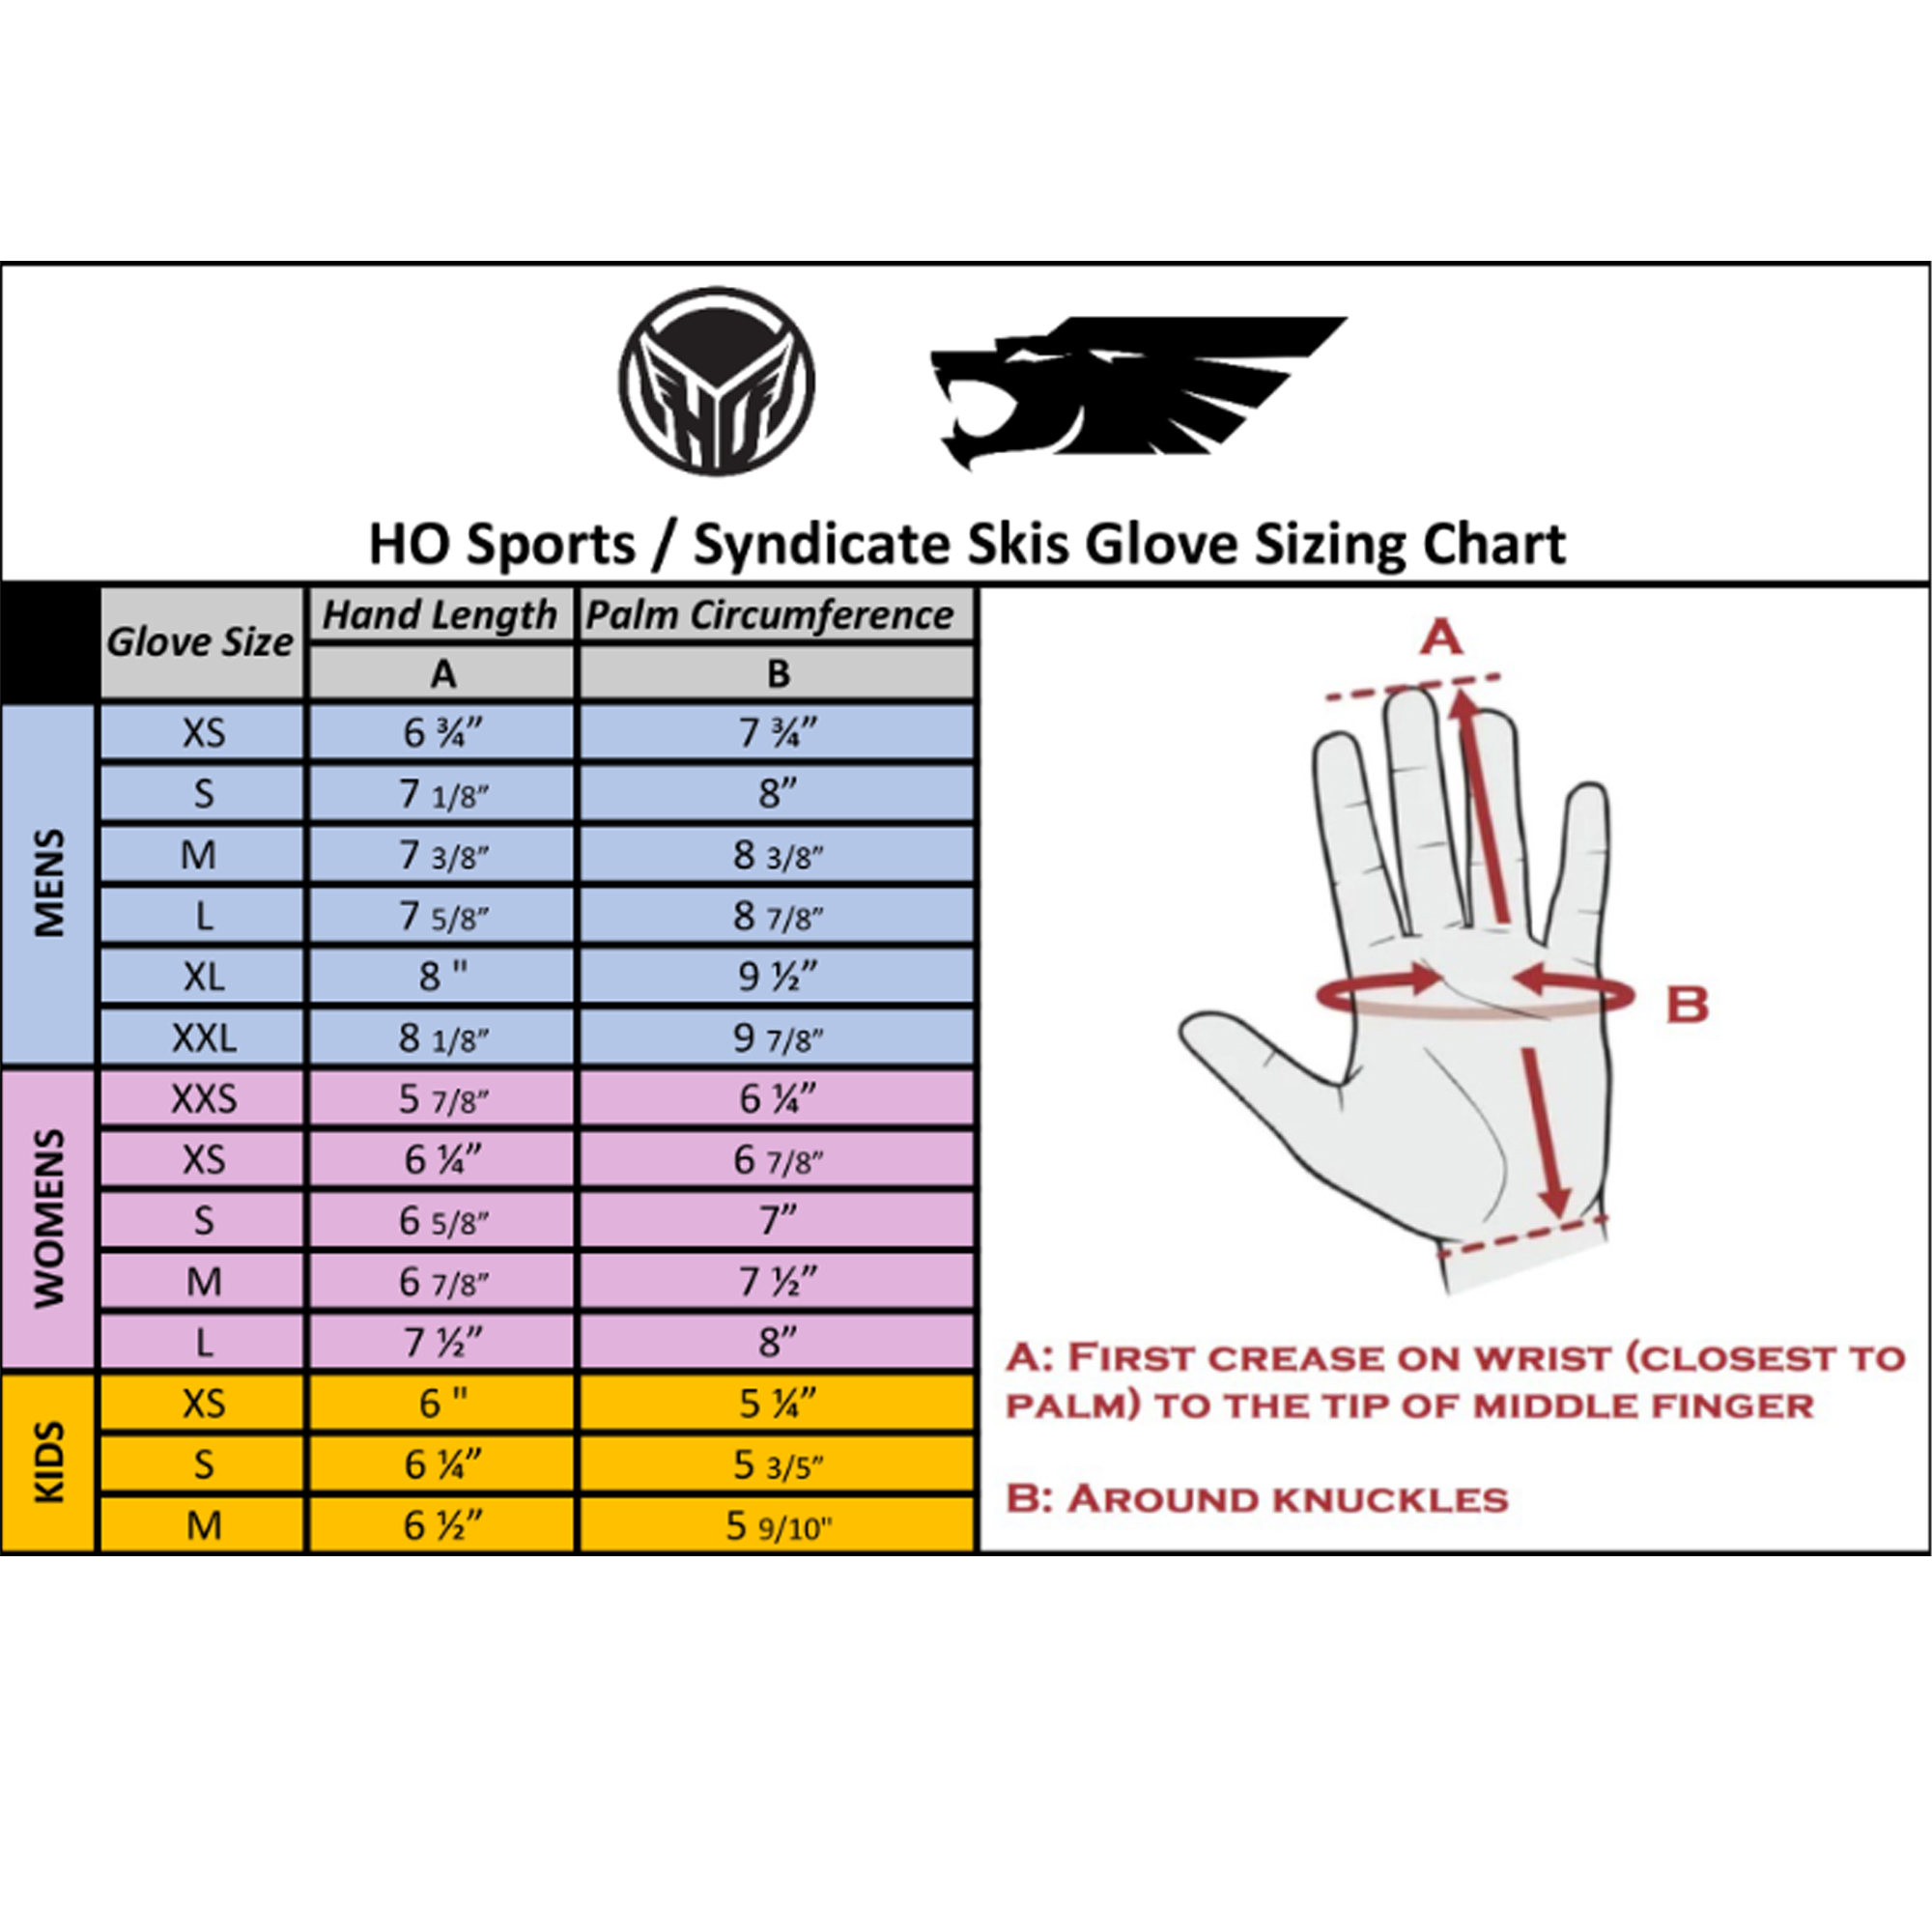 HO Sports Glove Chart (Image) 0 Matentabel